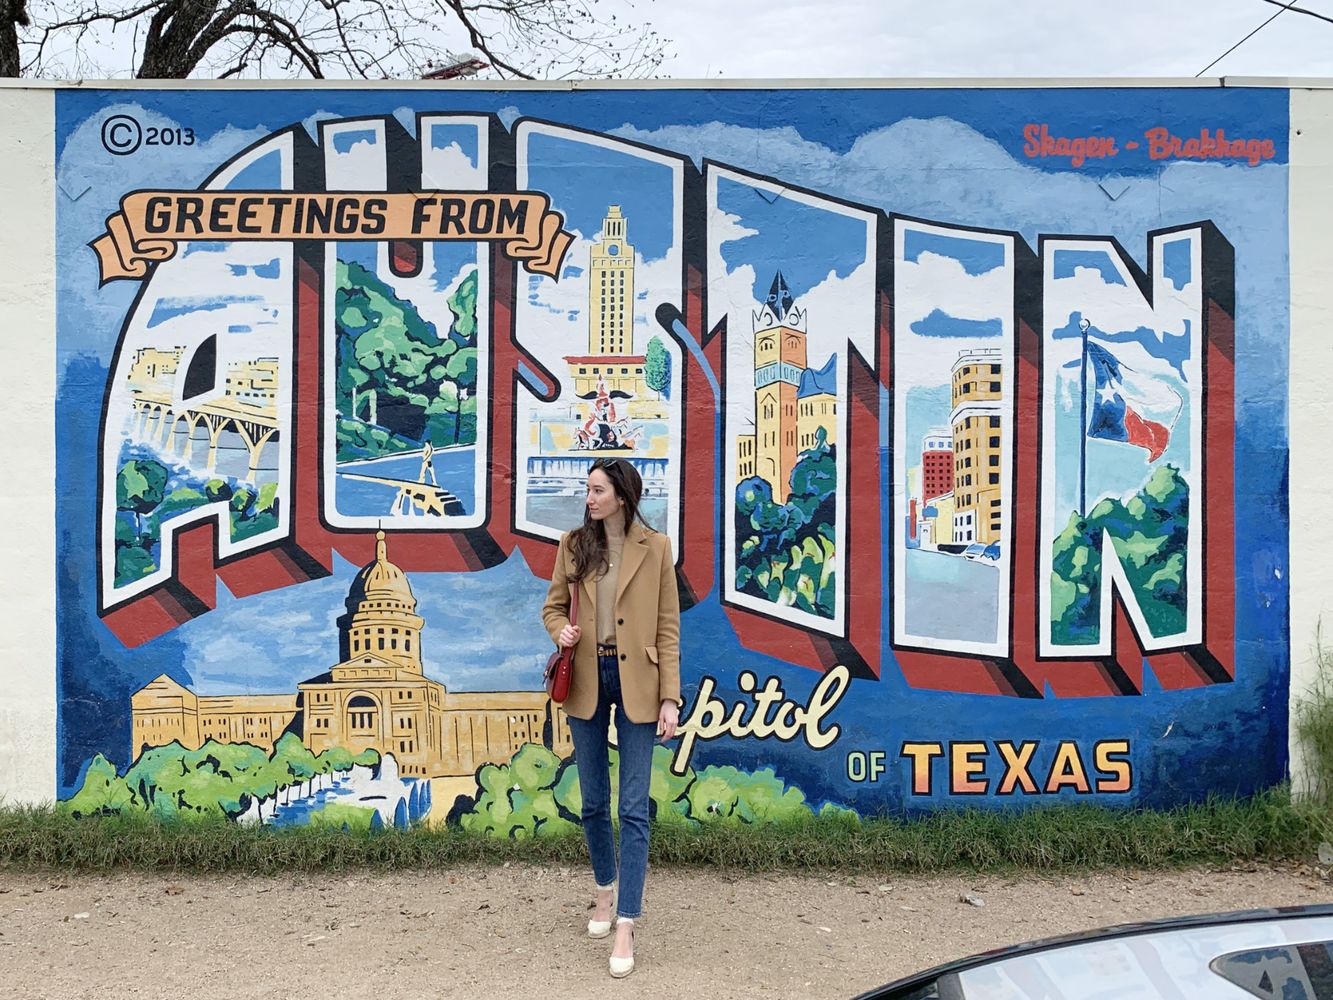 Greetings from Austin Mural in South Congress – Postcard mural in Austin